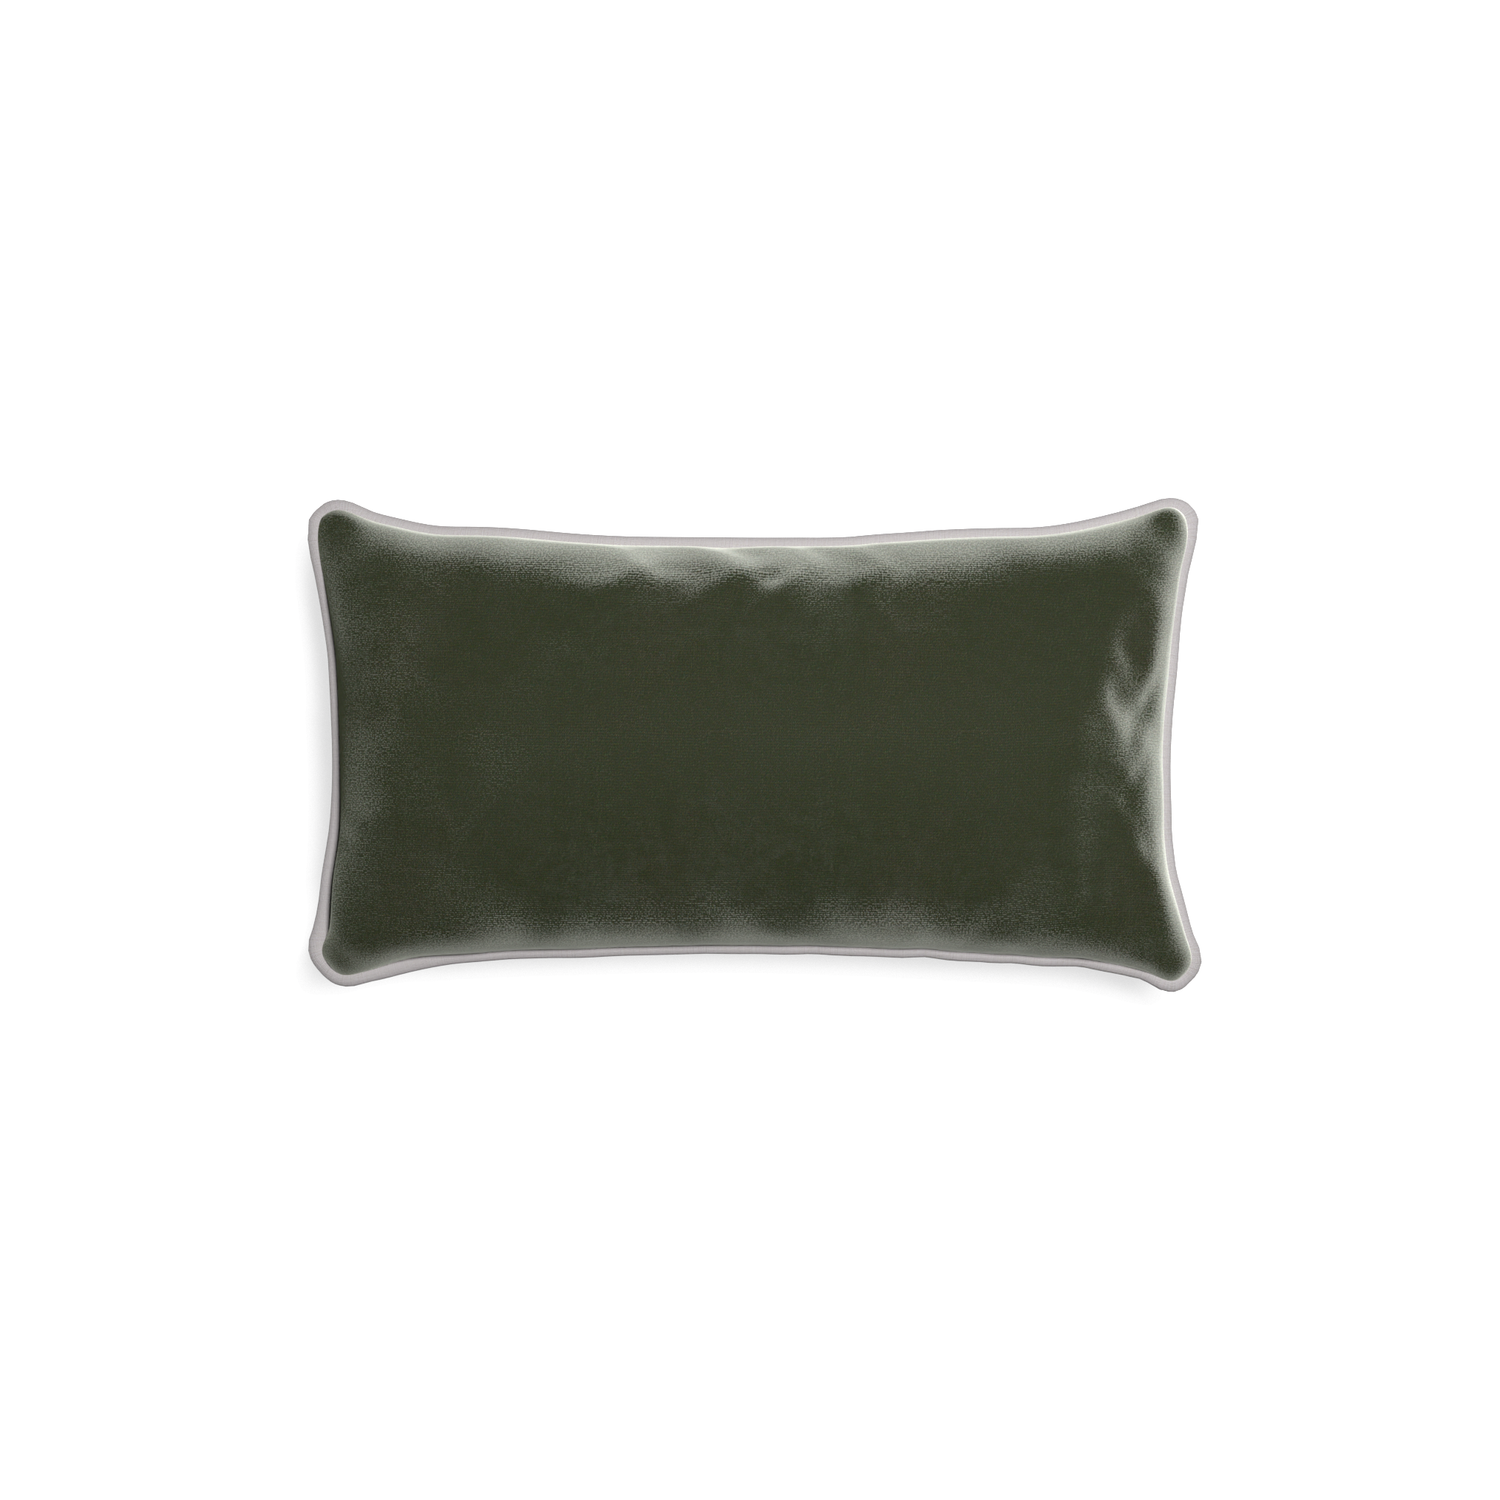 rectangle fern green velvet pillow with light grey piping